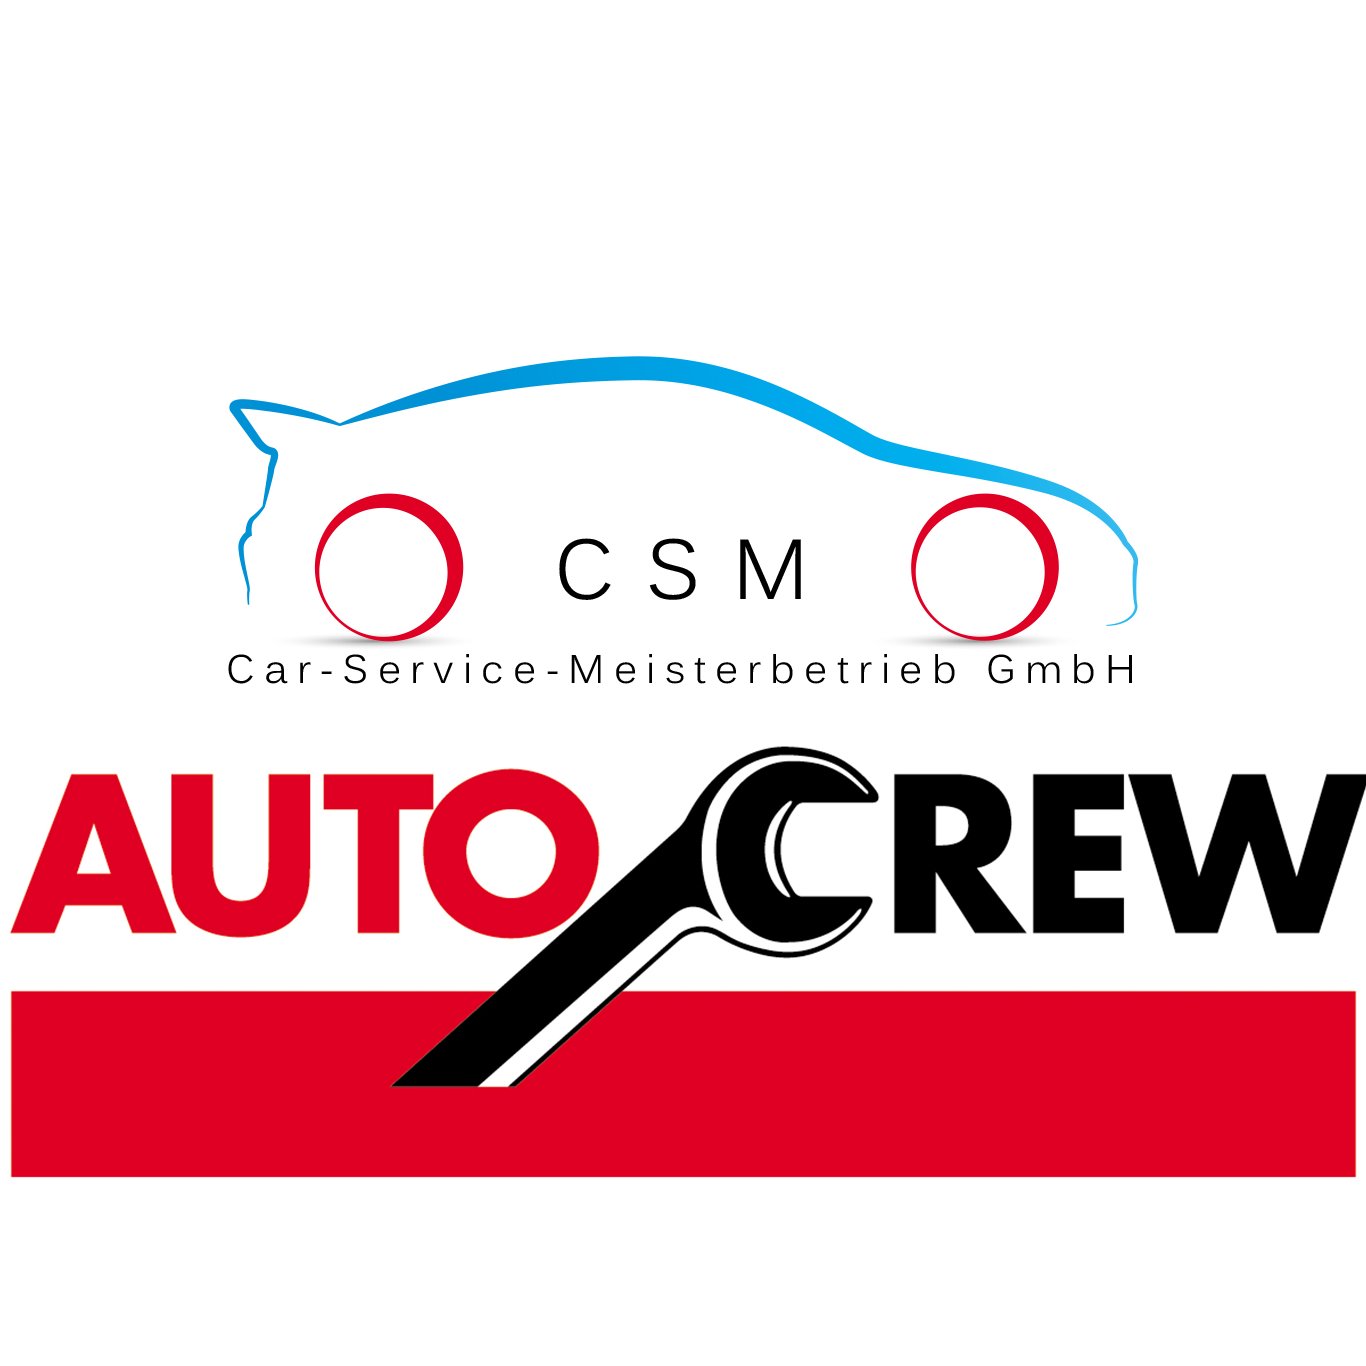 Logo AutoCrew - CSM Car-Service-Meisterbetrieb GmbH